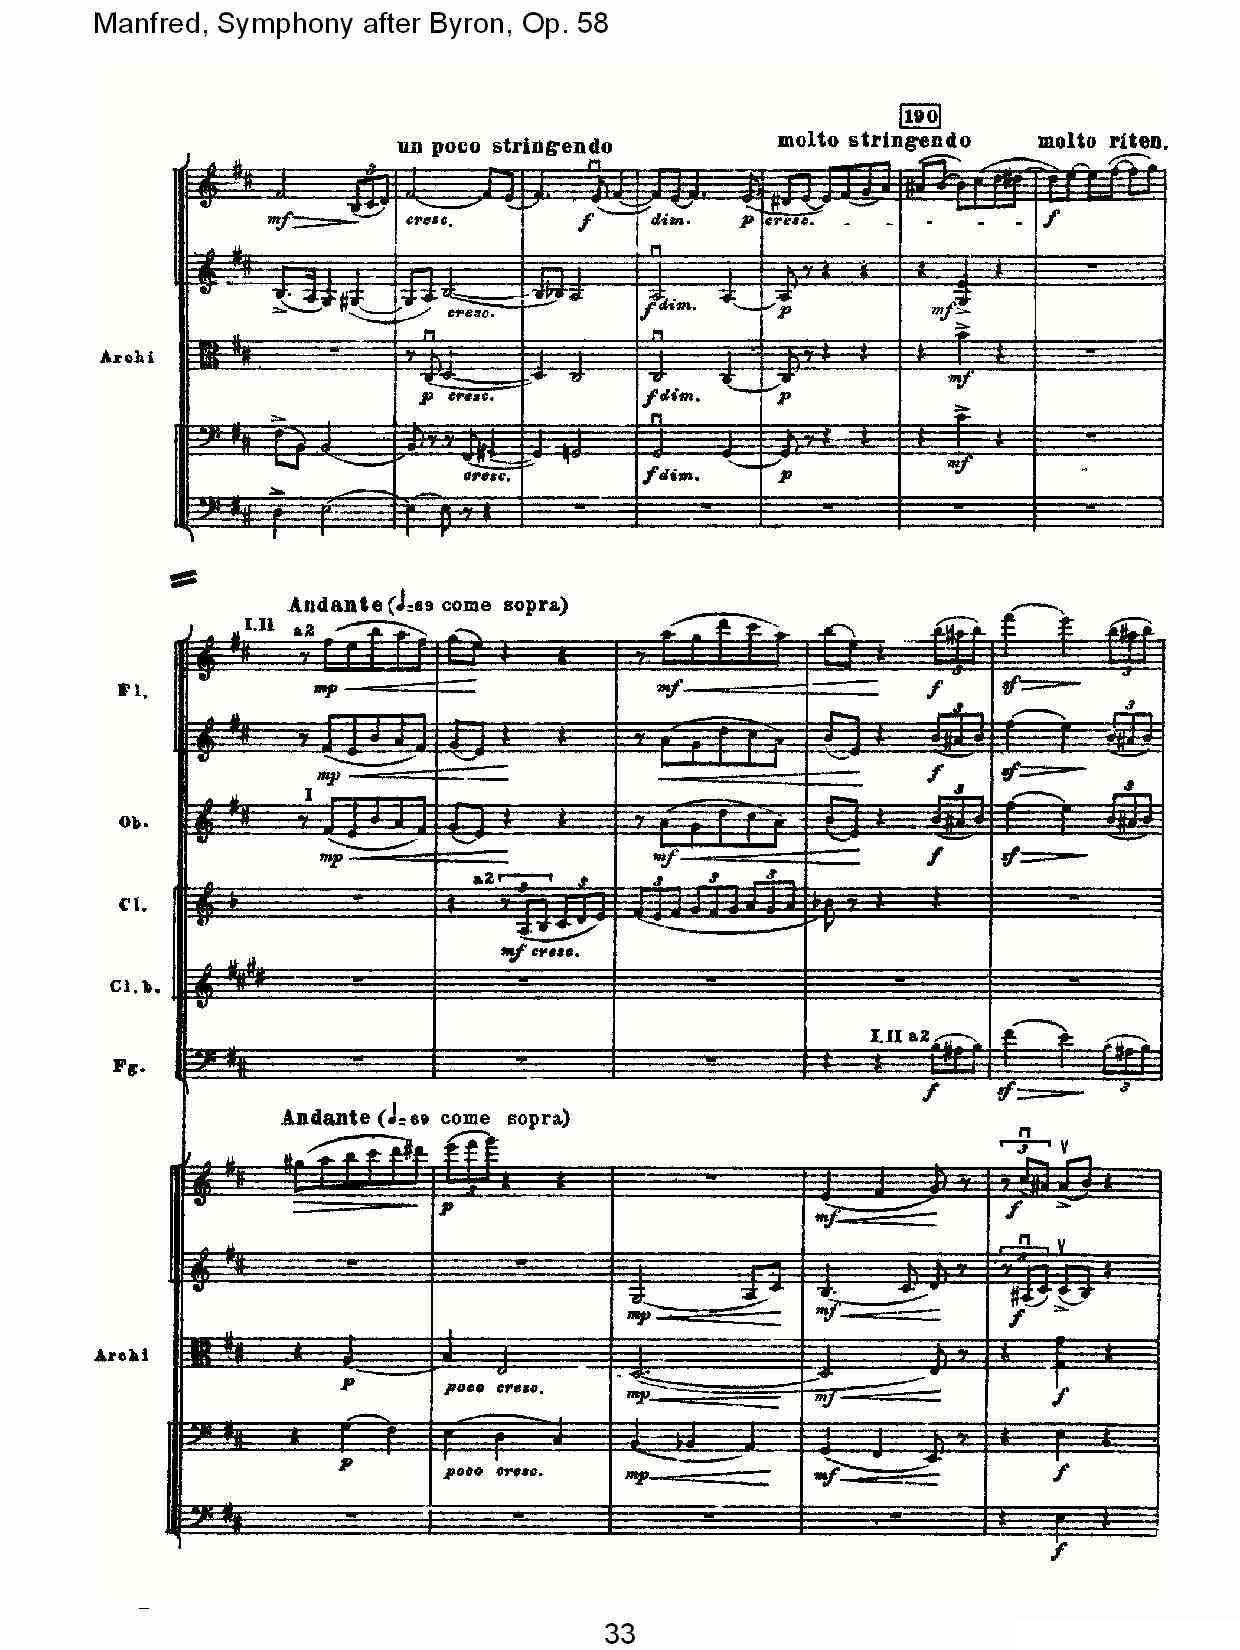 Manfred, Symphony after Byron, Op.58第一乐章（一）其它曲谱（图33）